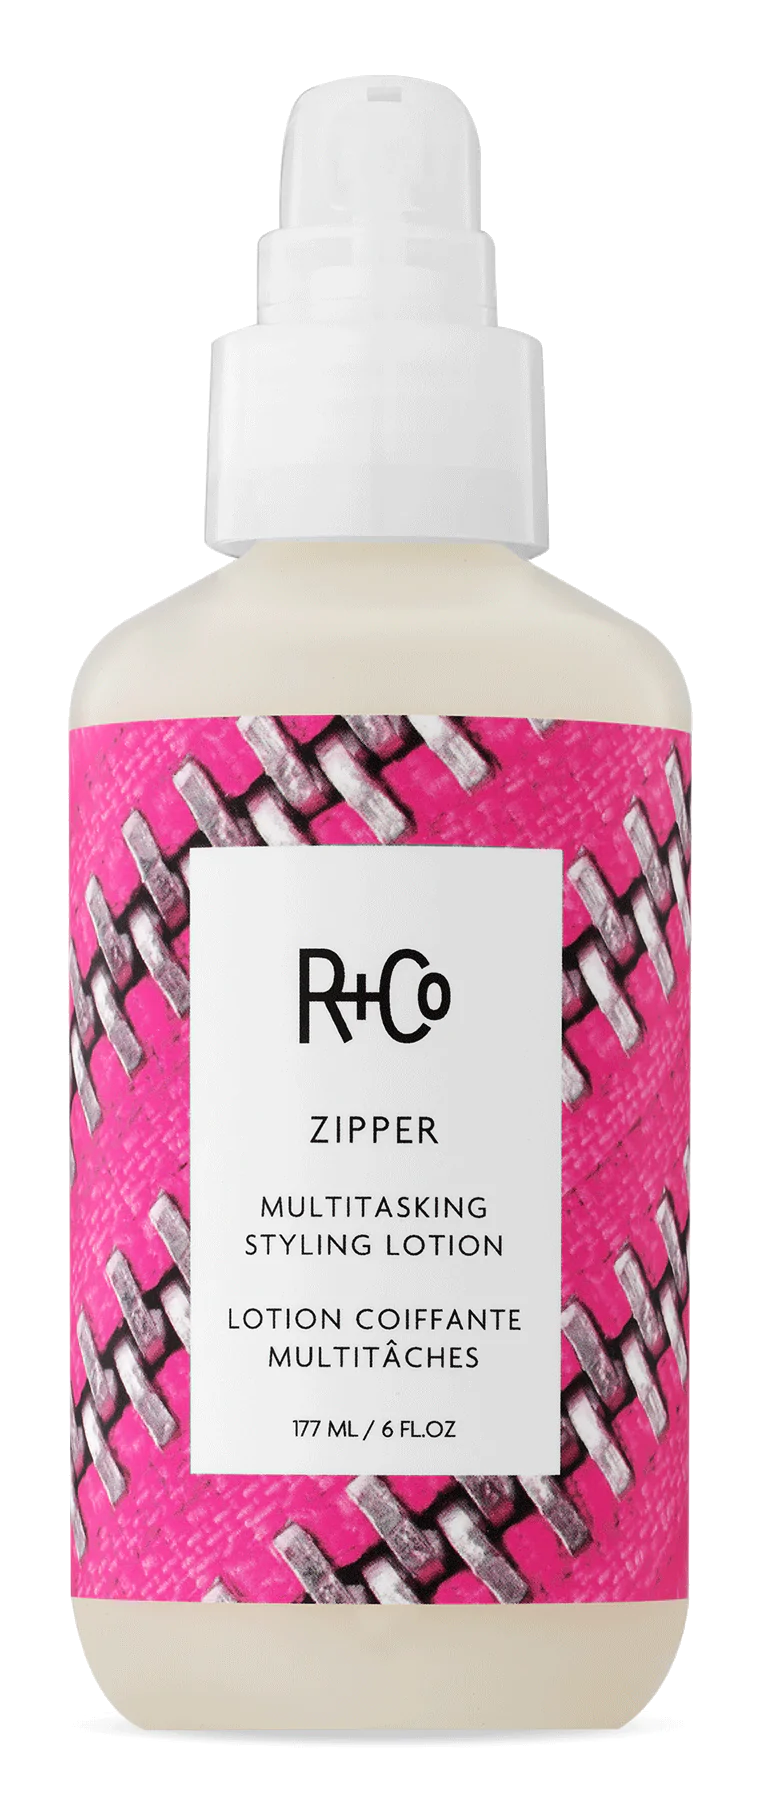 R+CO Zipper Multitasking Styling Lotion